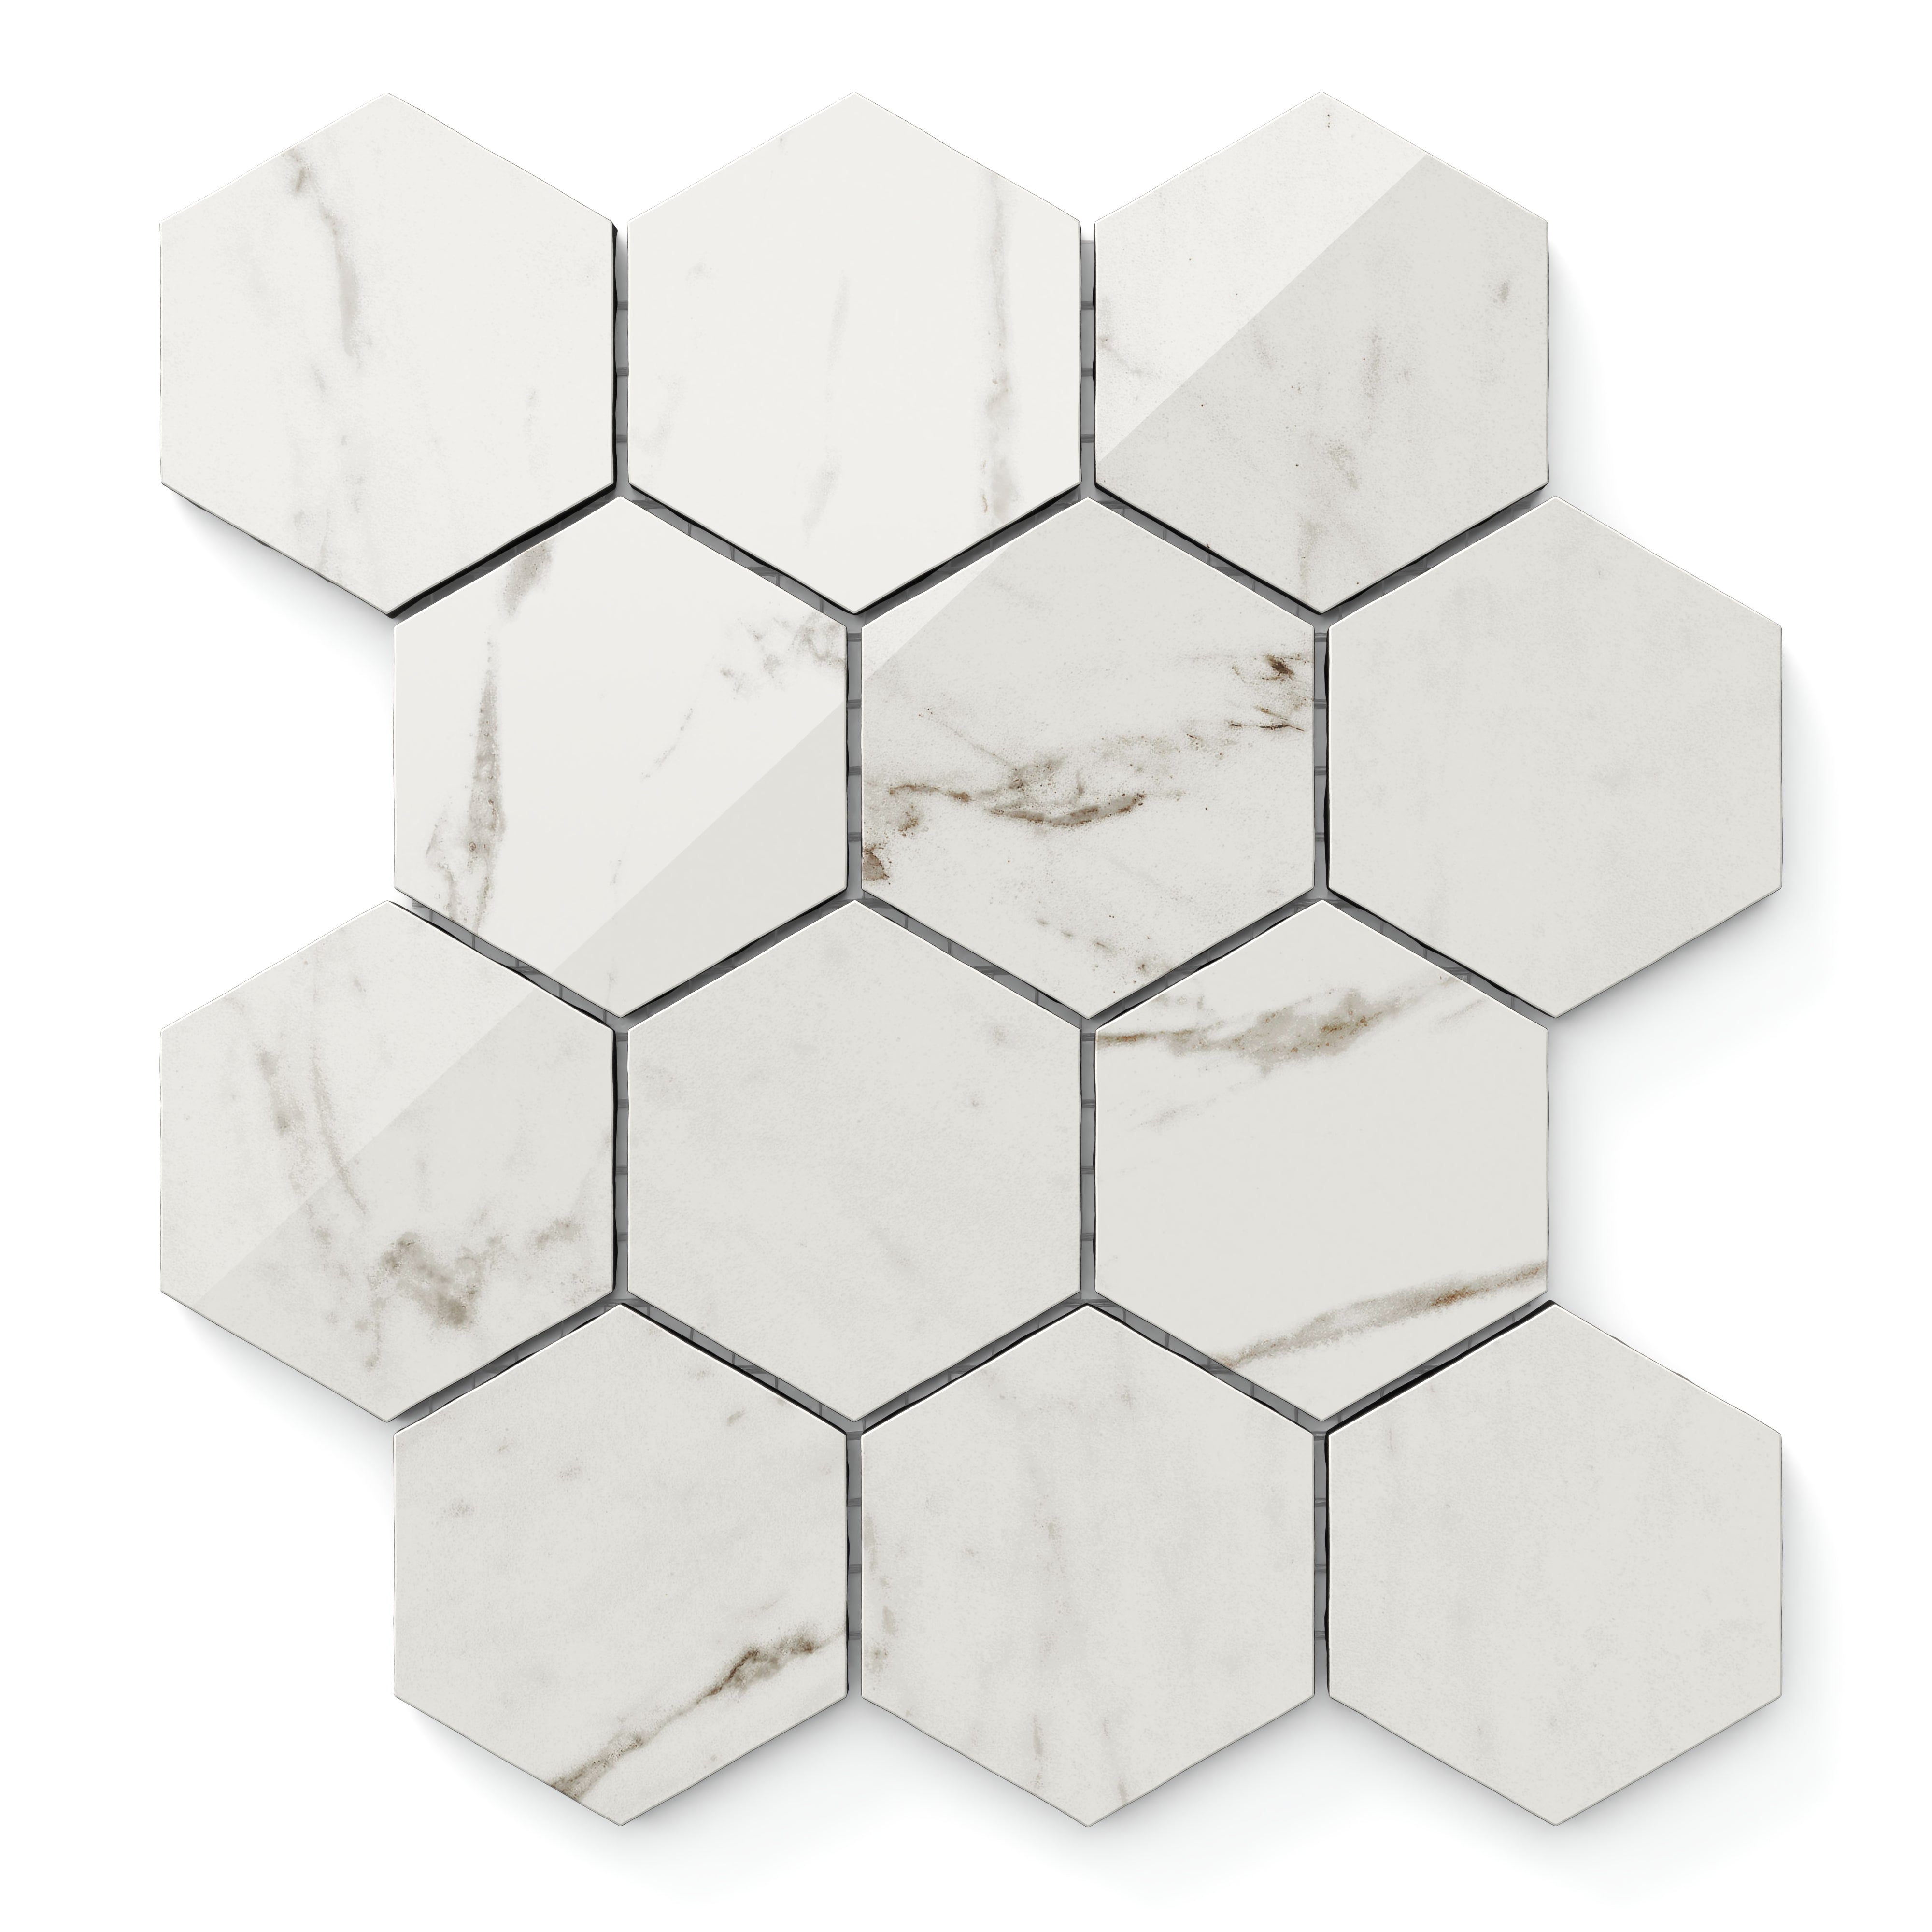 Blair 3x3 Polished Porcelain Hexagon Mosaic Tile in White Carrara